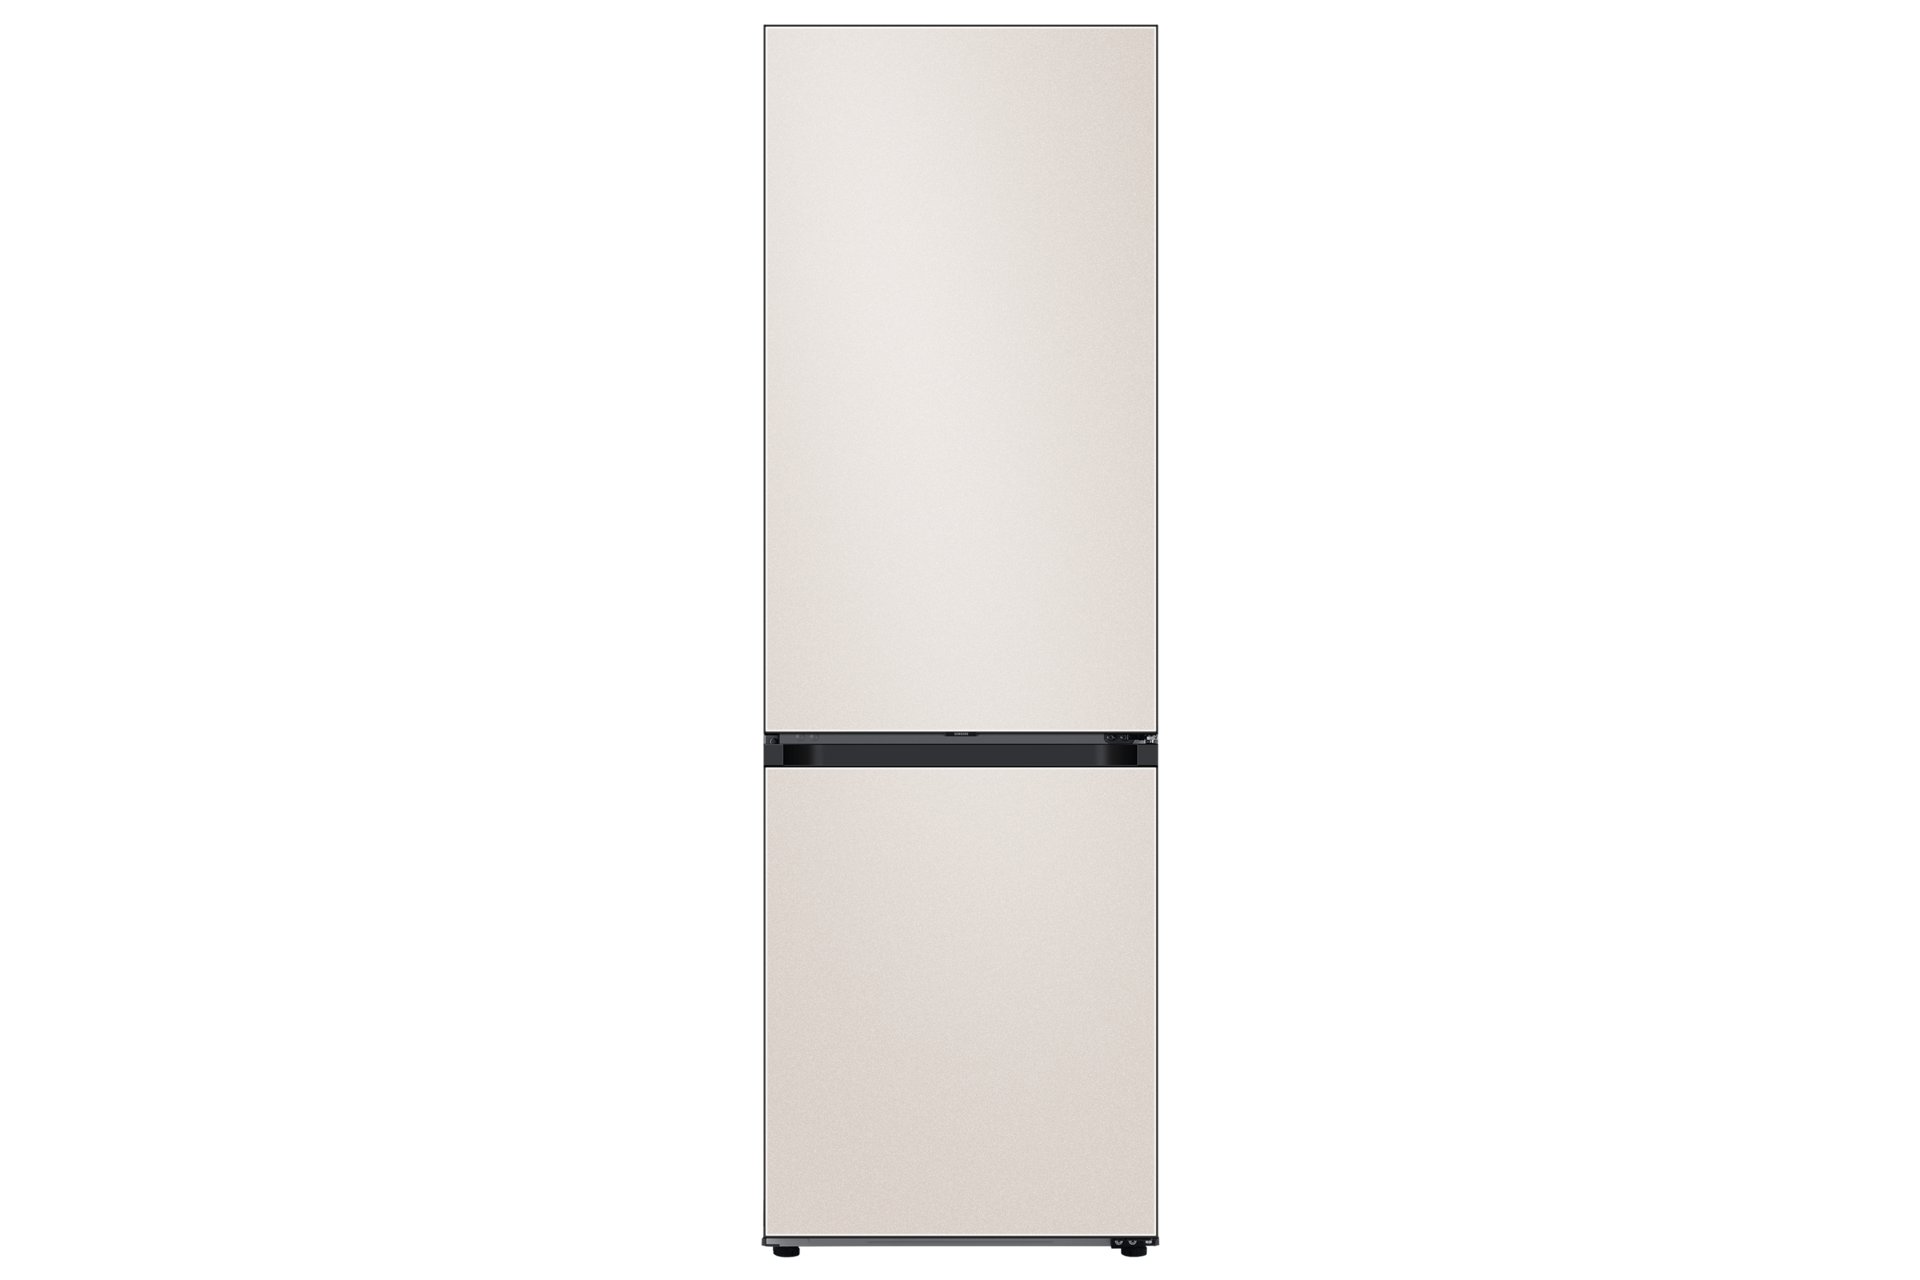 Samsung Réfrigérateur Frigo Combiné Inox 344l Froid Ventilé No